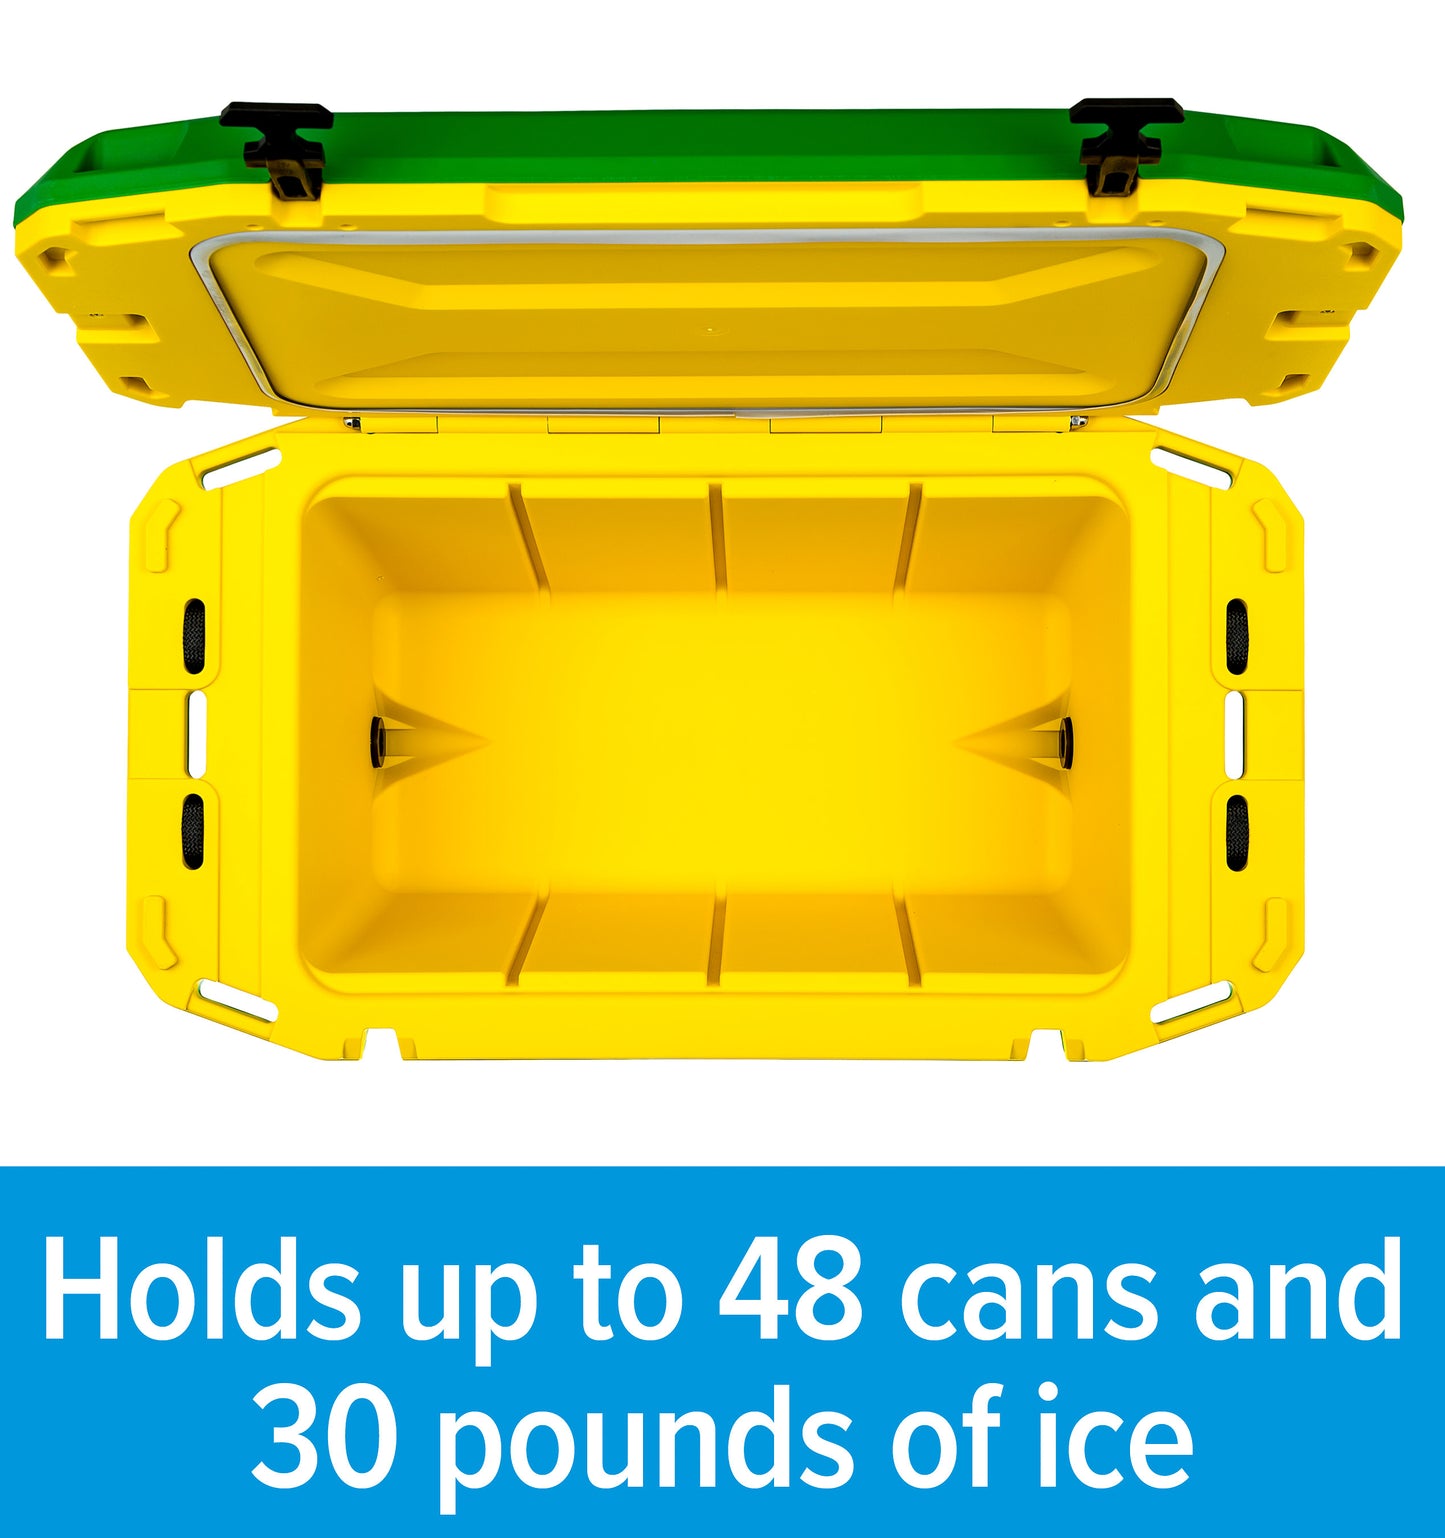 Currituck 30 and 50 Quart Premium Coolers - Green & Yellow